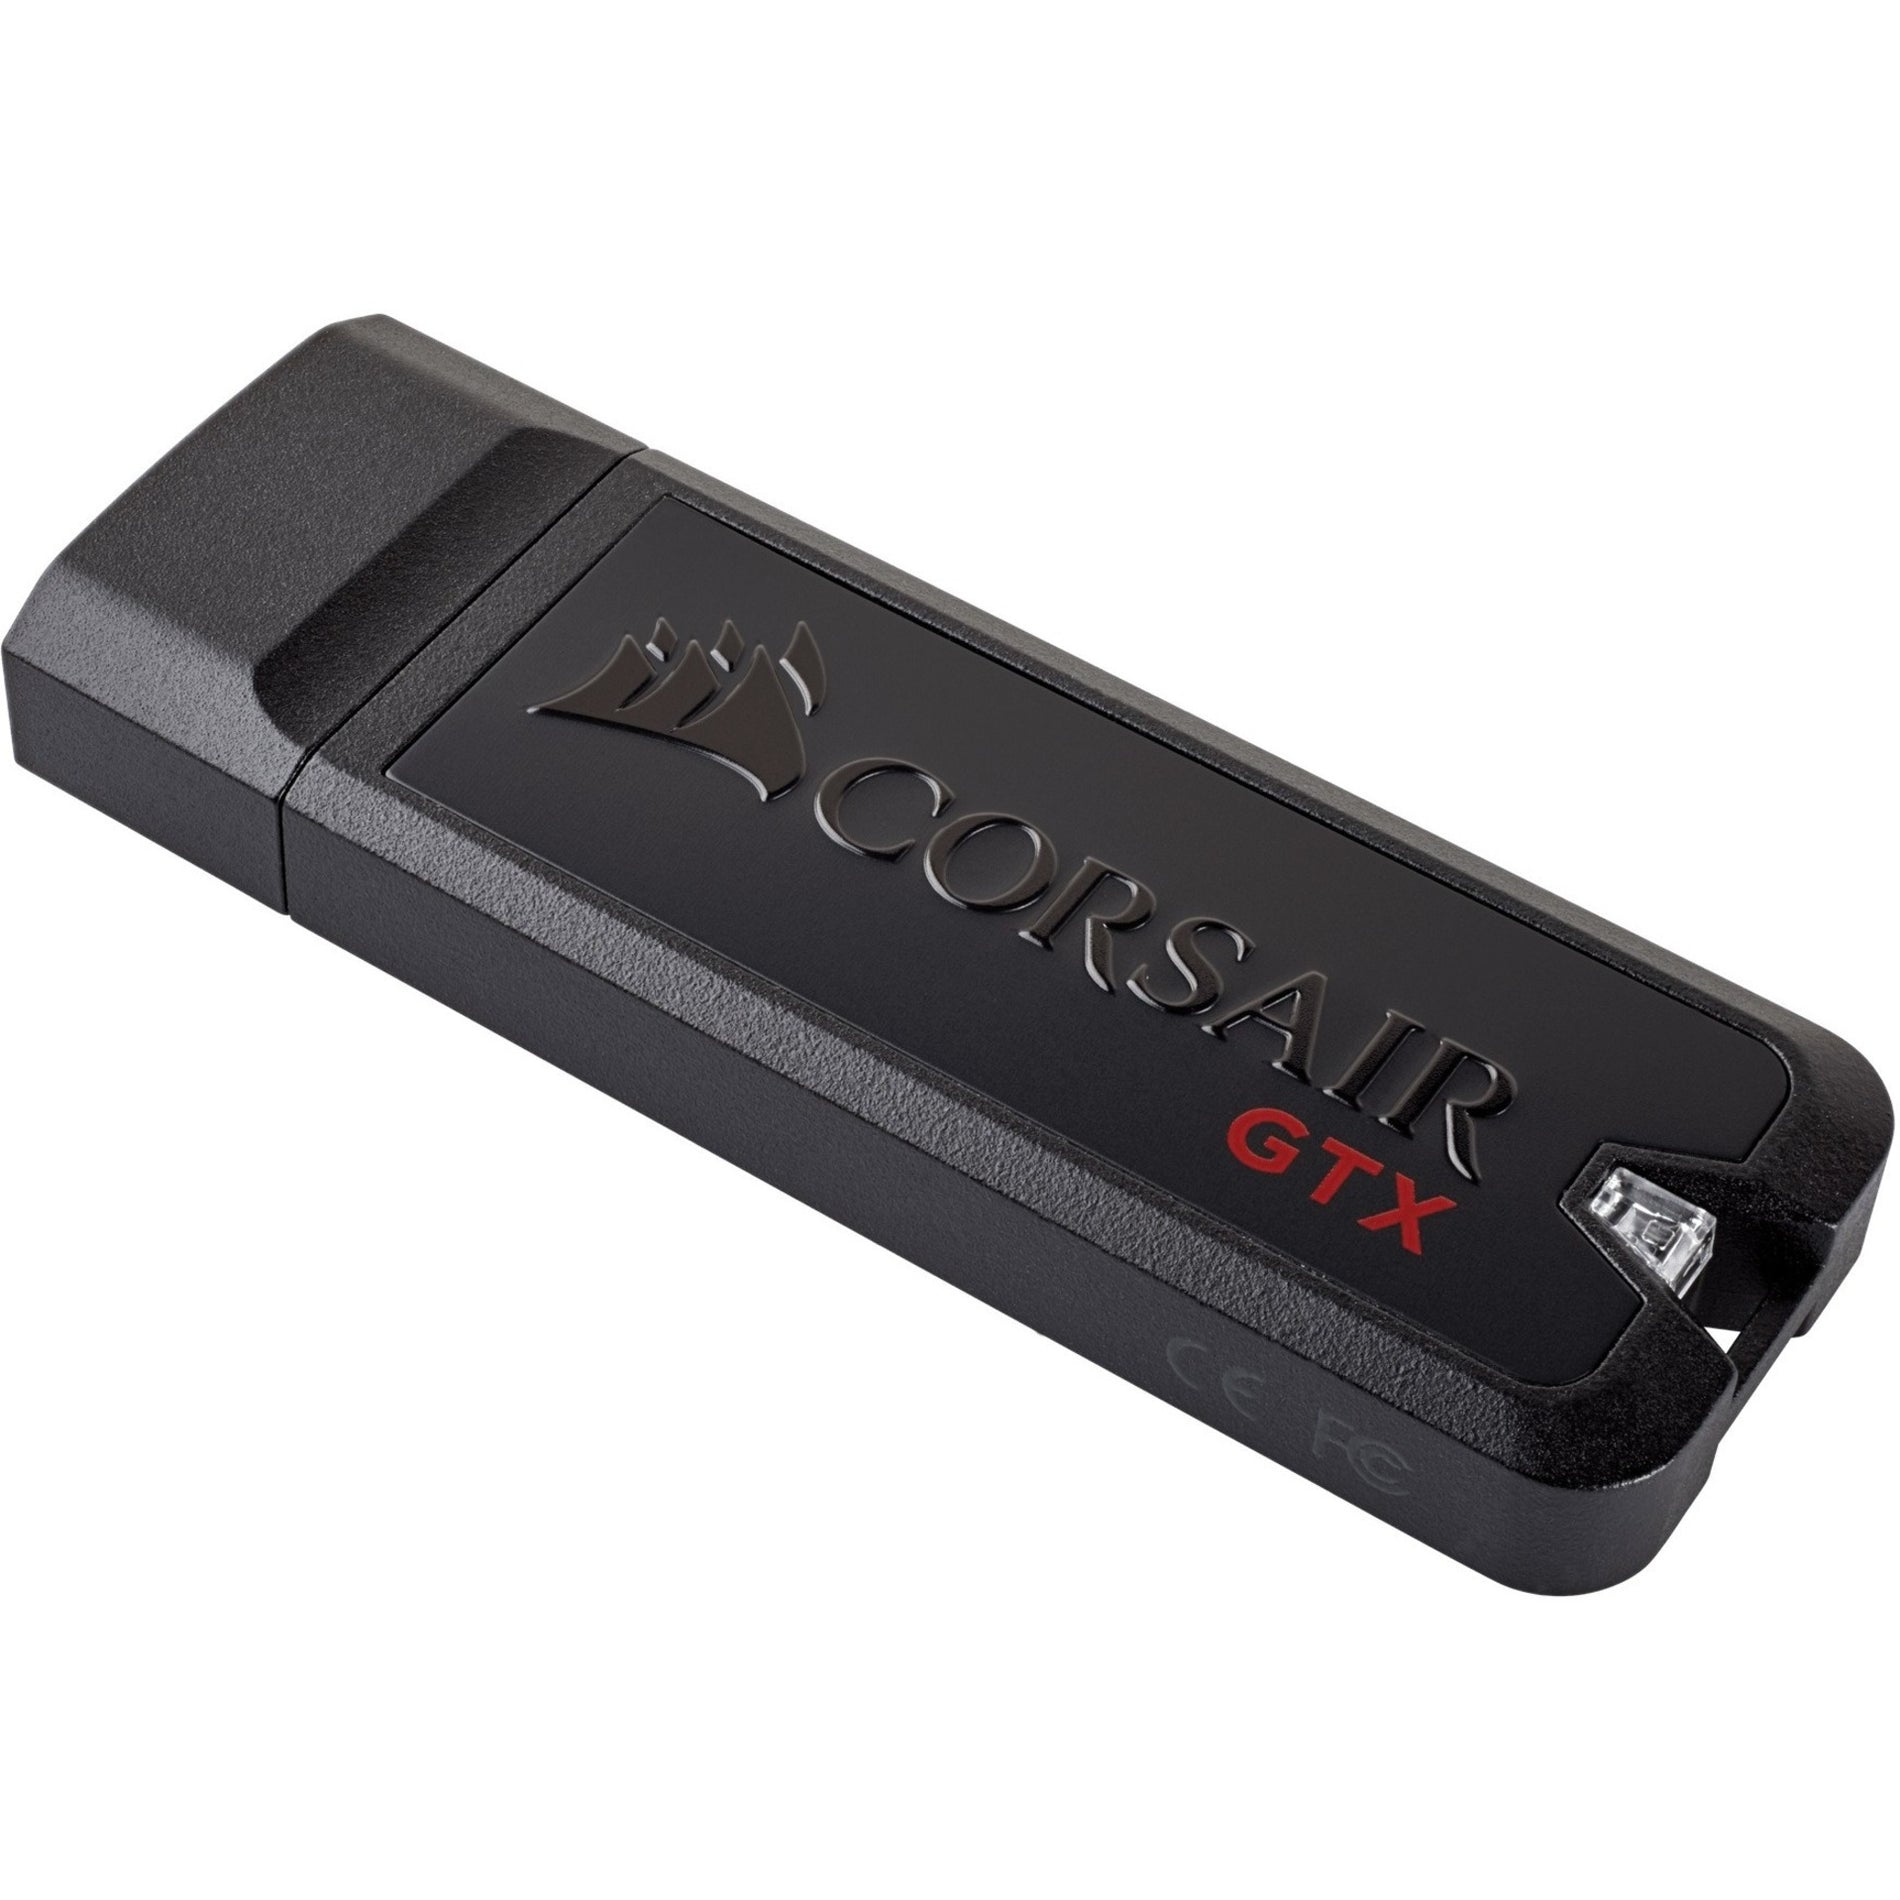 Corsair CMFVYGTX3C-1TB Flash Voyager GTX USB 3.1 1TB Premium Flash Drive, 5 Year Warranty, Taiwan Origin